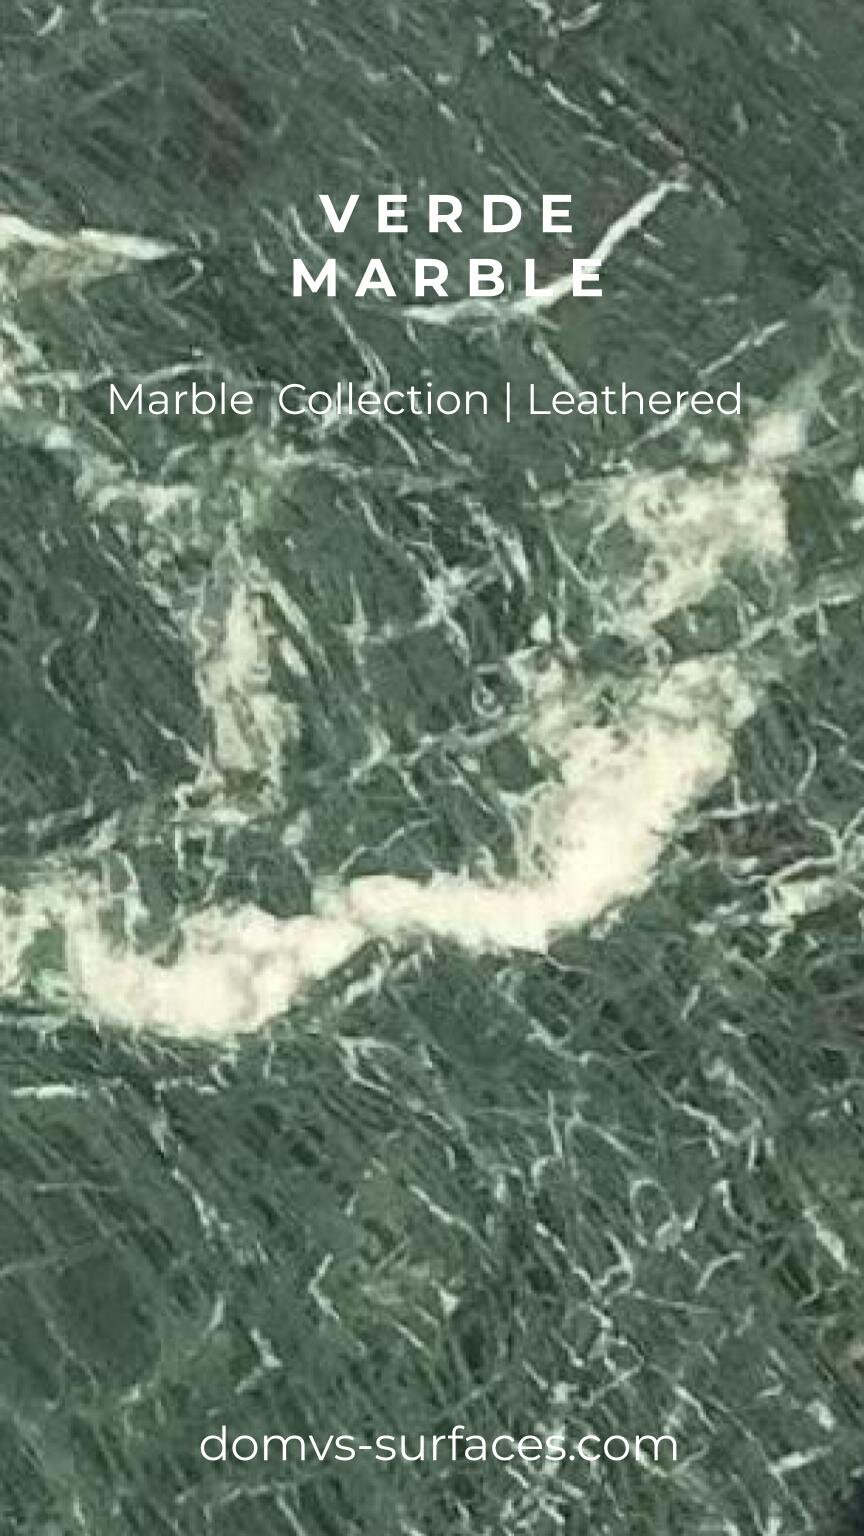 IGS Marble Verde Marble Slab Leathered DOMVS SURFACES.jpg